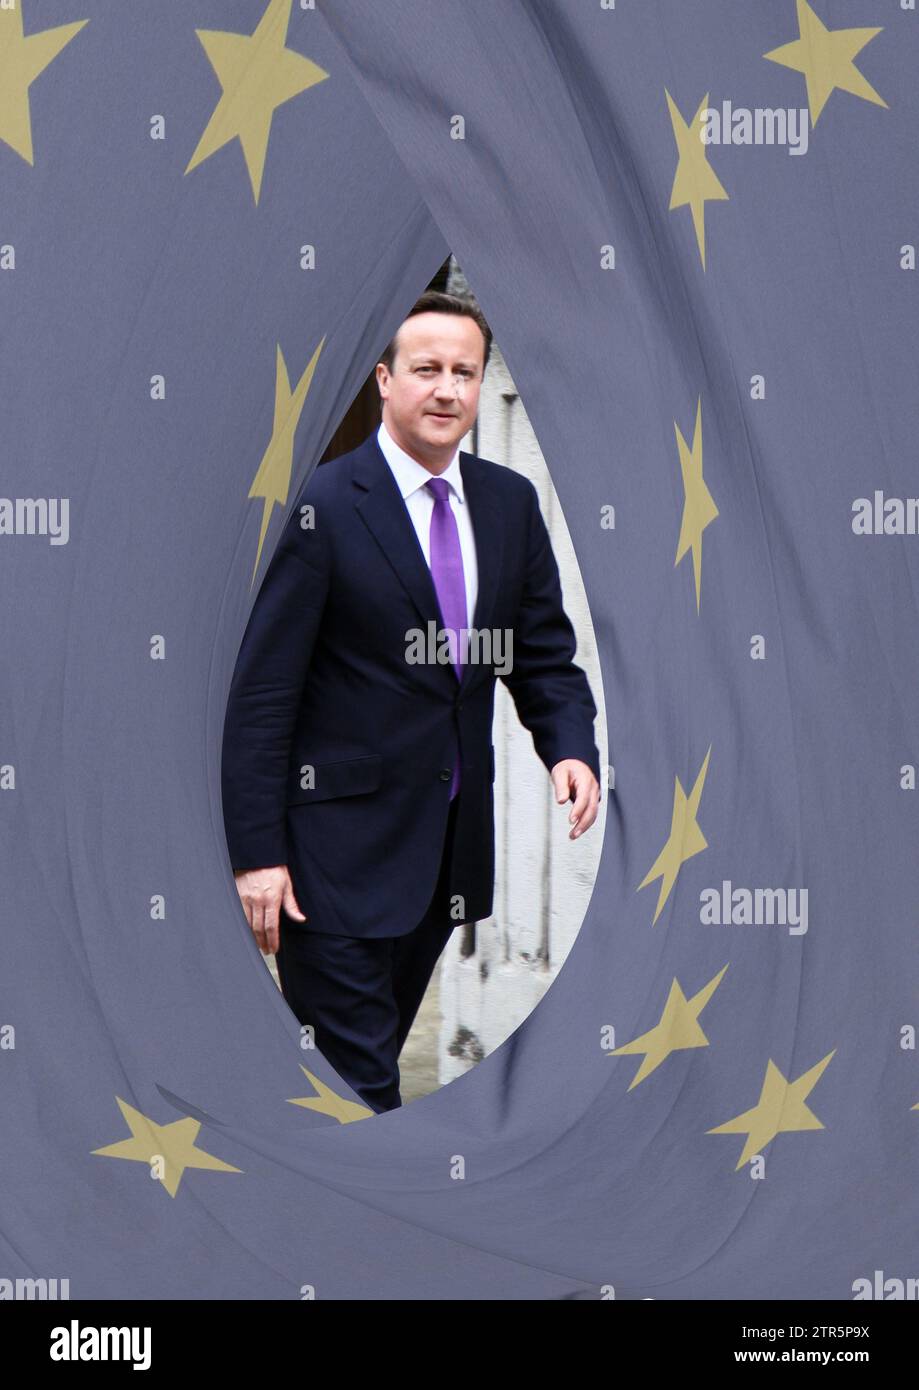 David Cameron. Eu Referendum. Brexit. Eu Flag. British Prime Ministers. Famous politicians. Europe. British politicians. International relations. Stock Photo